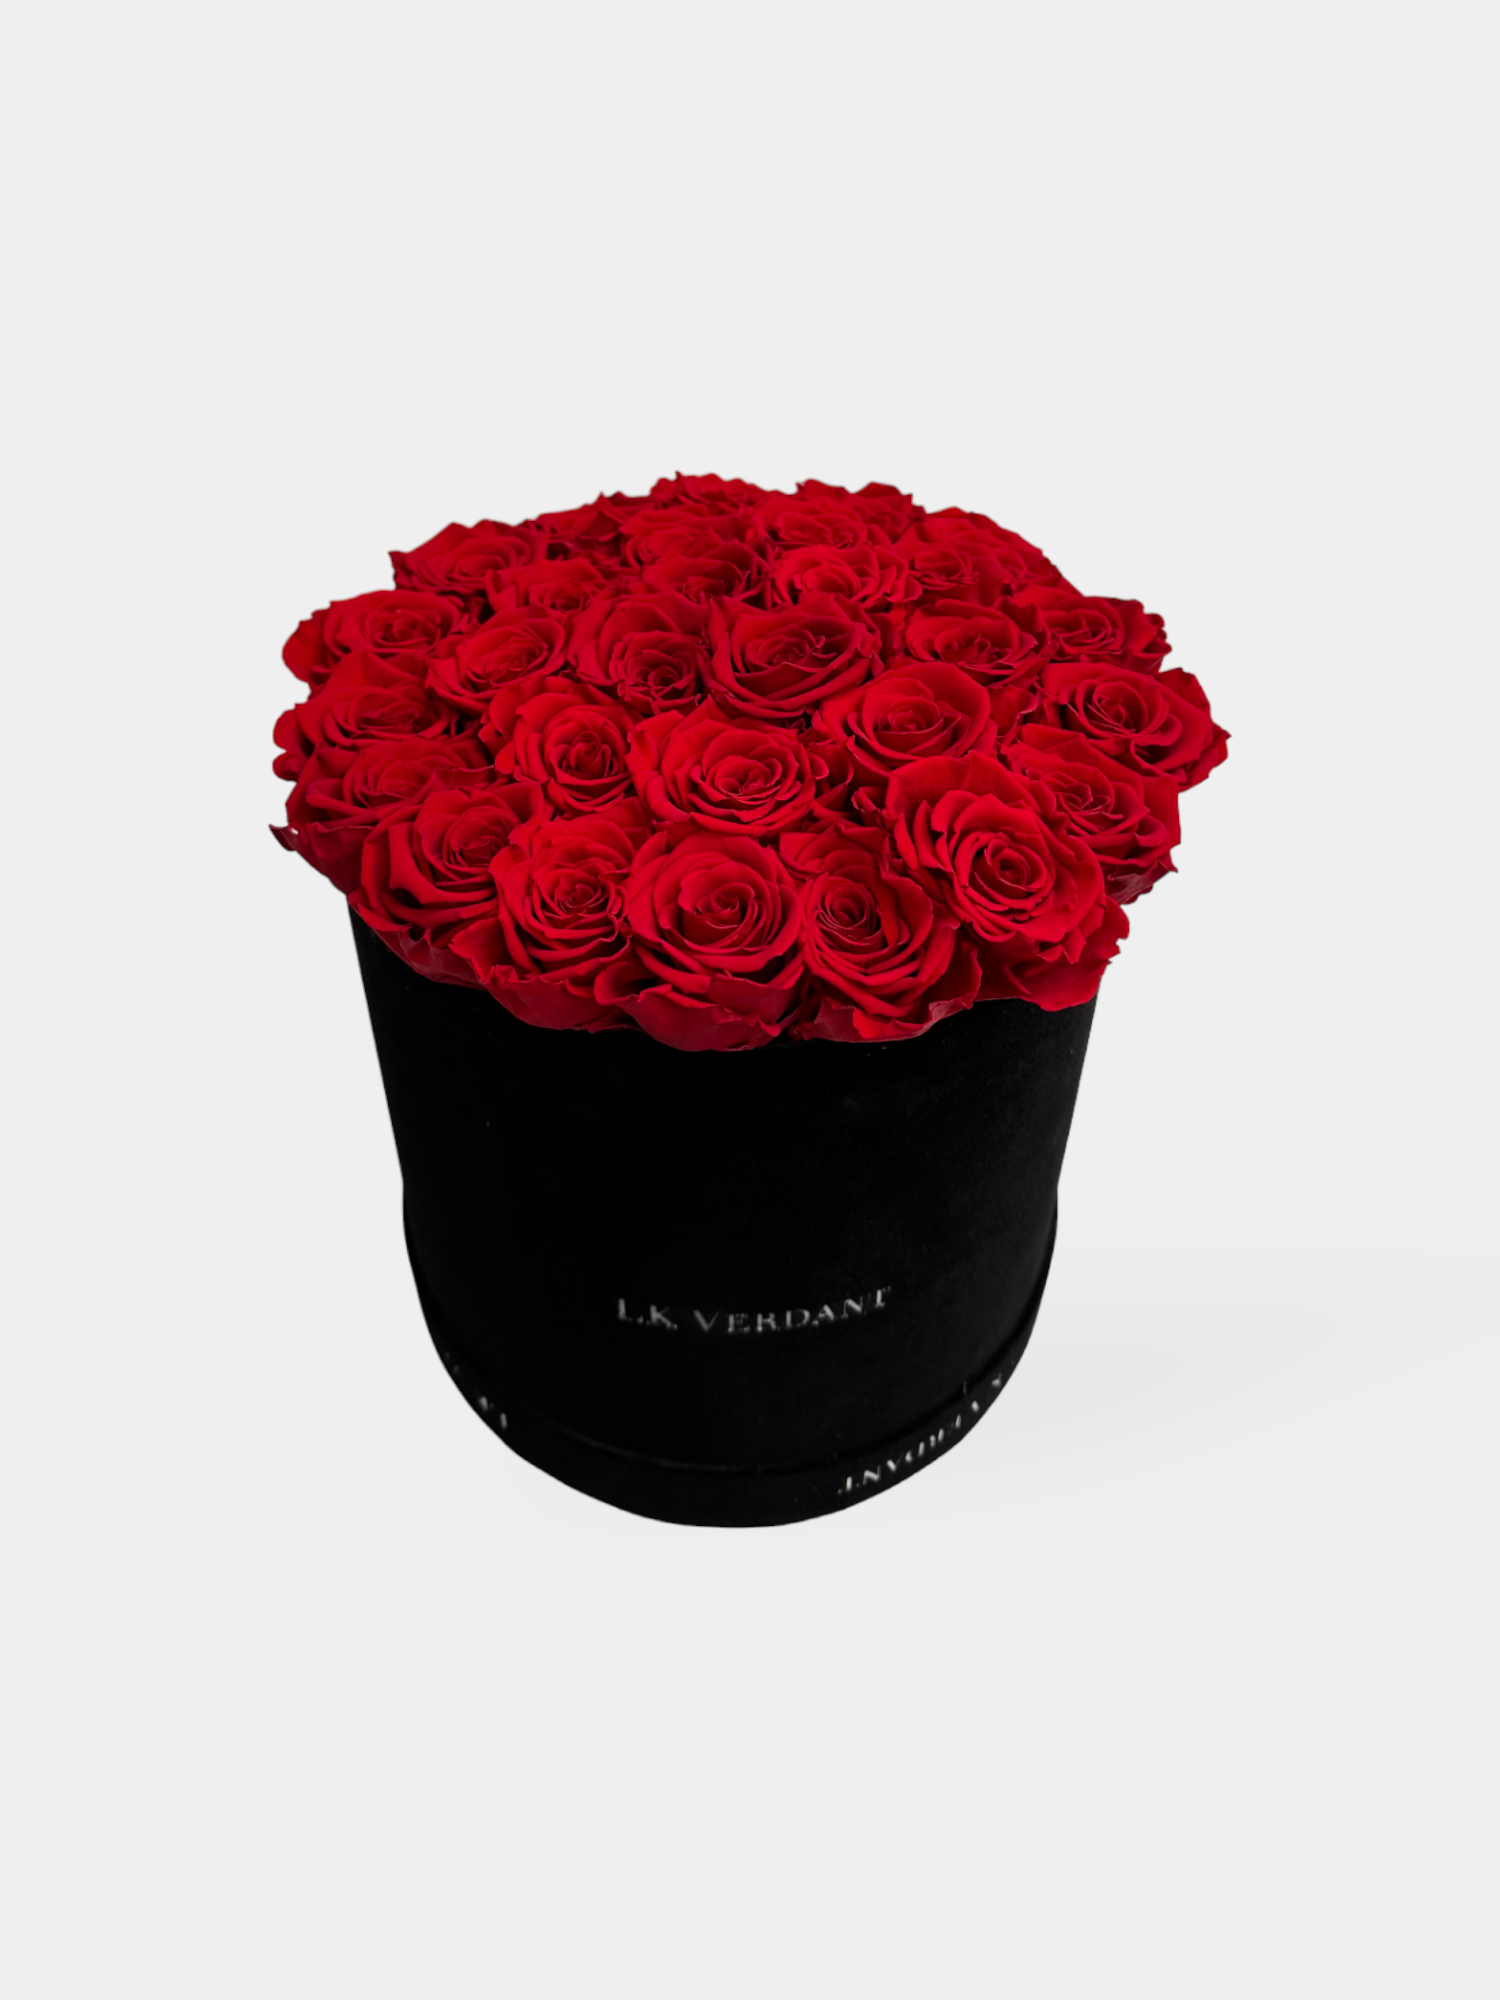 Large Forever Roses Hatbox - LK VERDANT